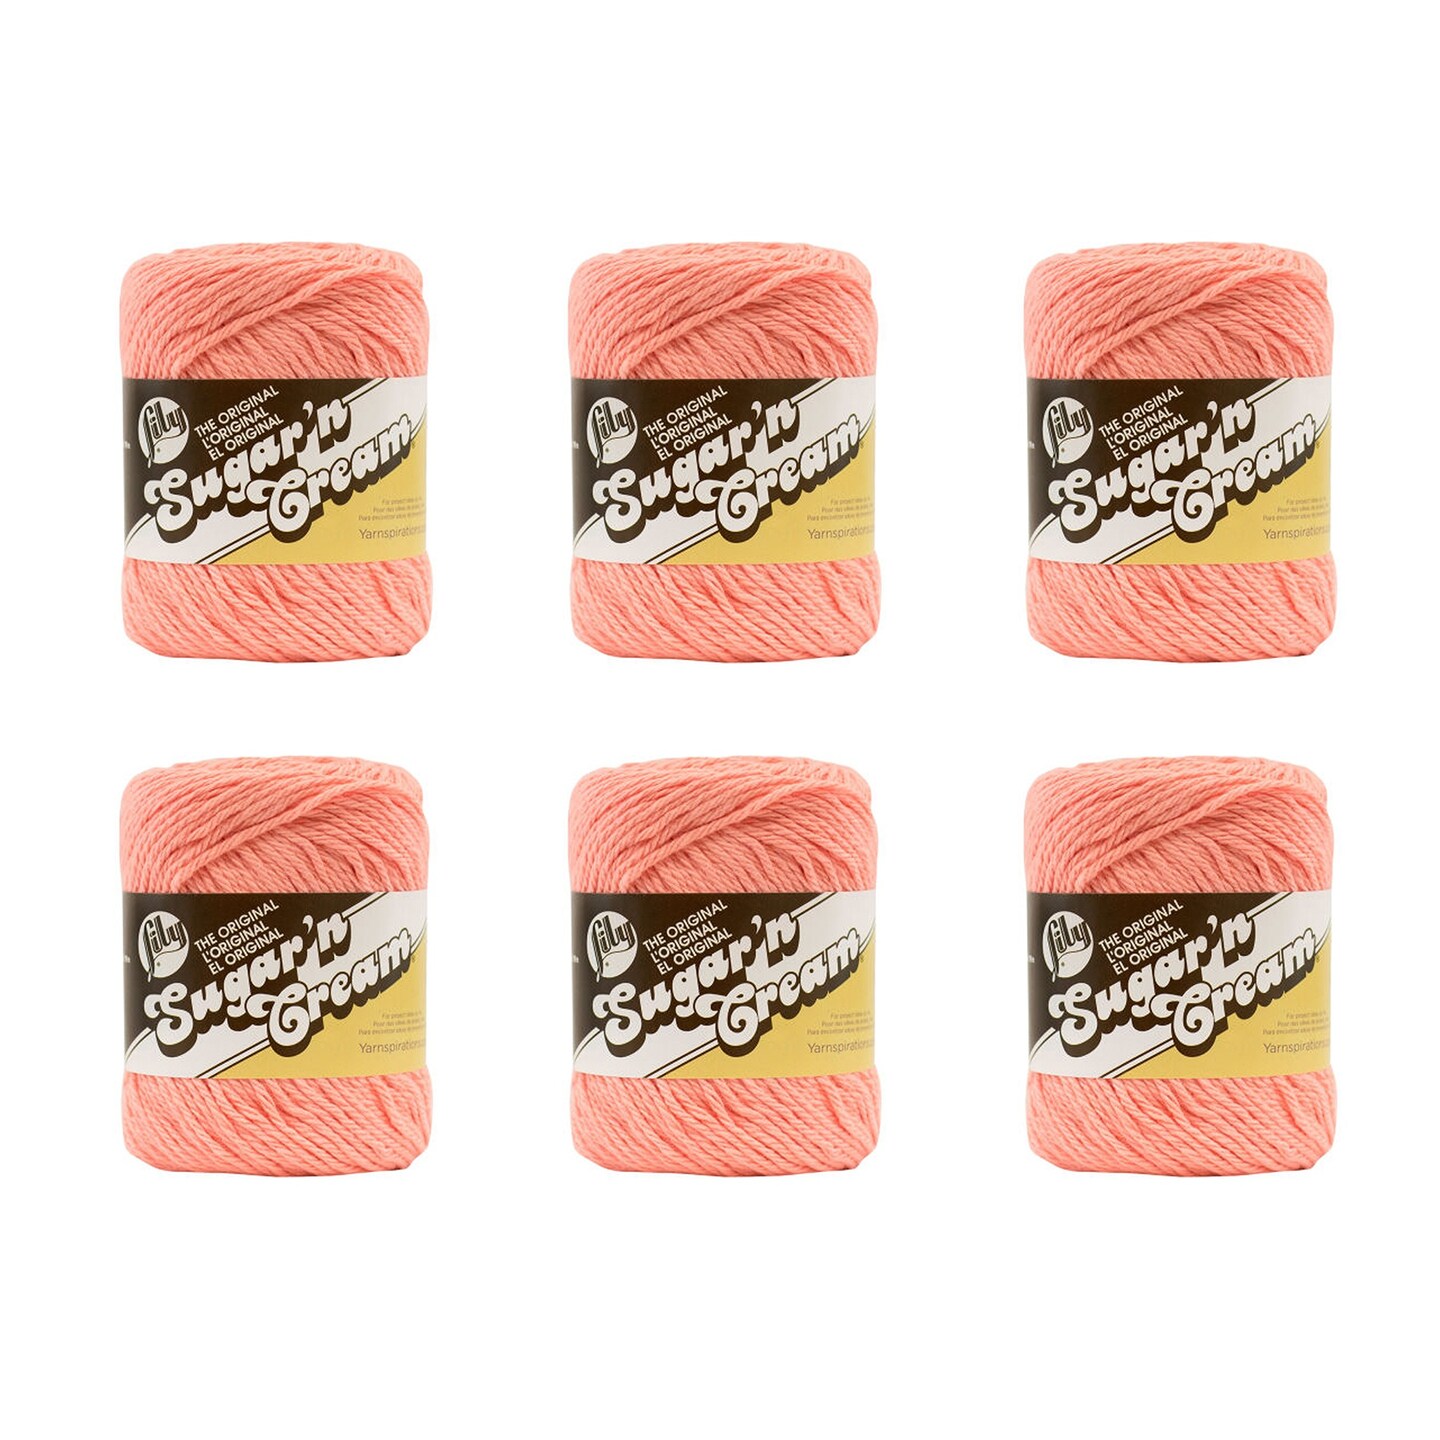 Lily Sugar'N Cream Tea Rose Yarn - 6 Pack of 71g/2.5oz - Cotton